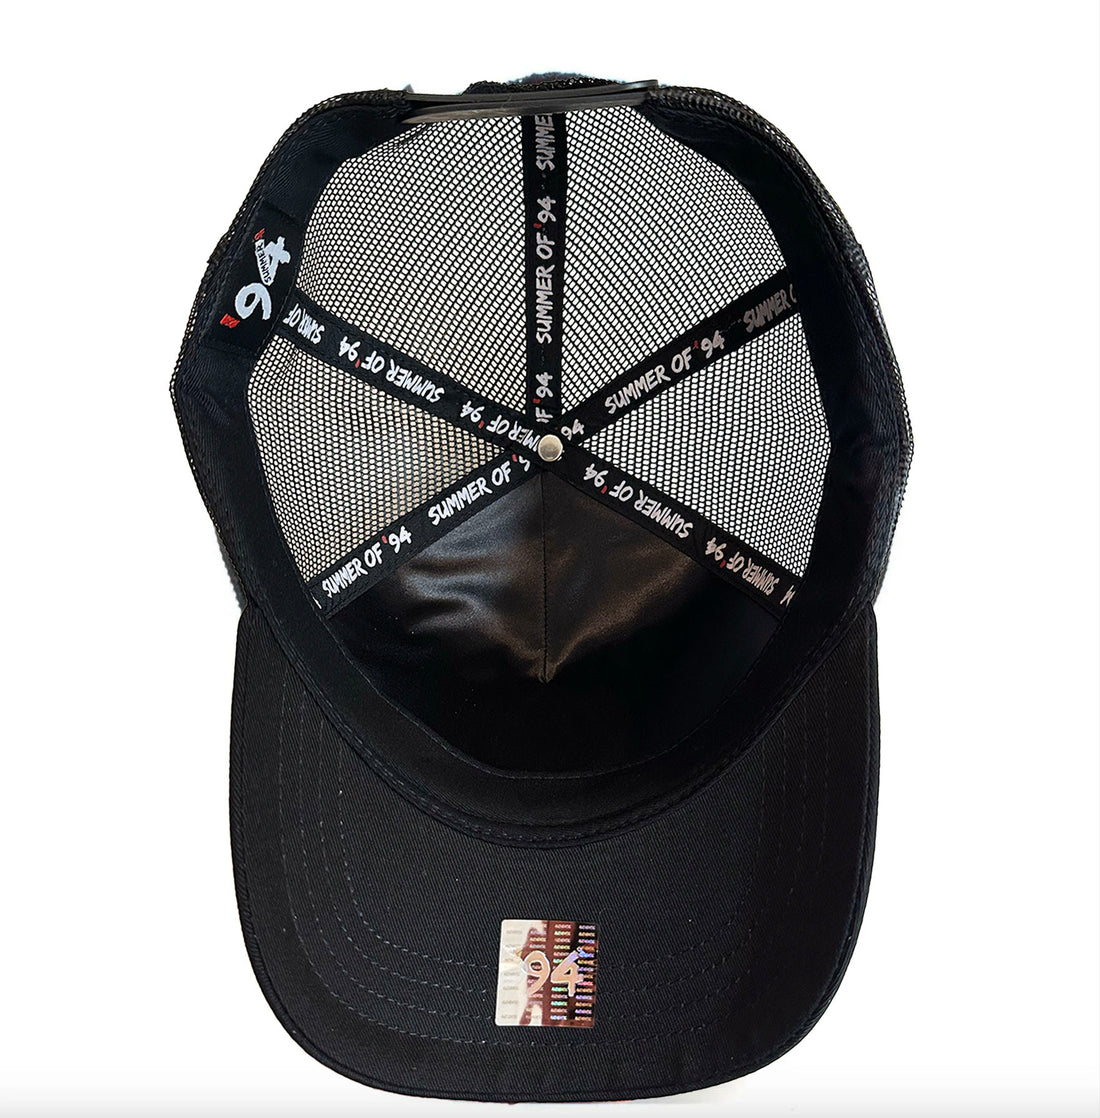 Pit Viper - "Bad Influence" Trucker Hat - Black